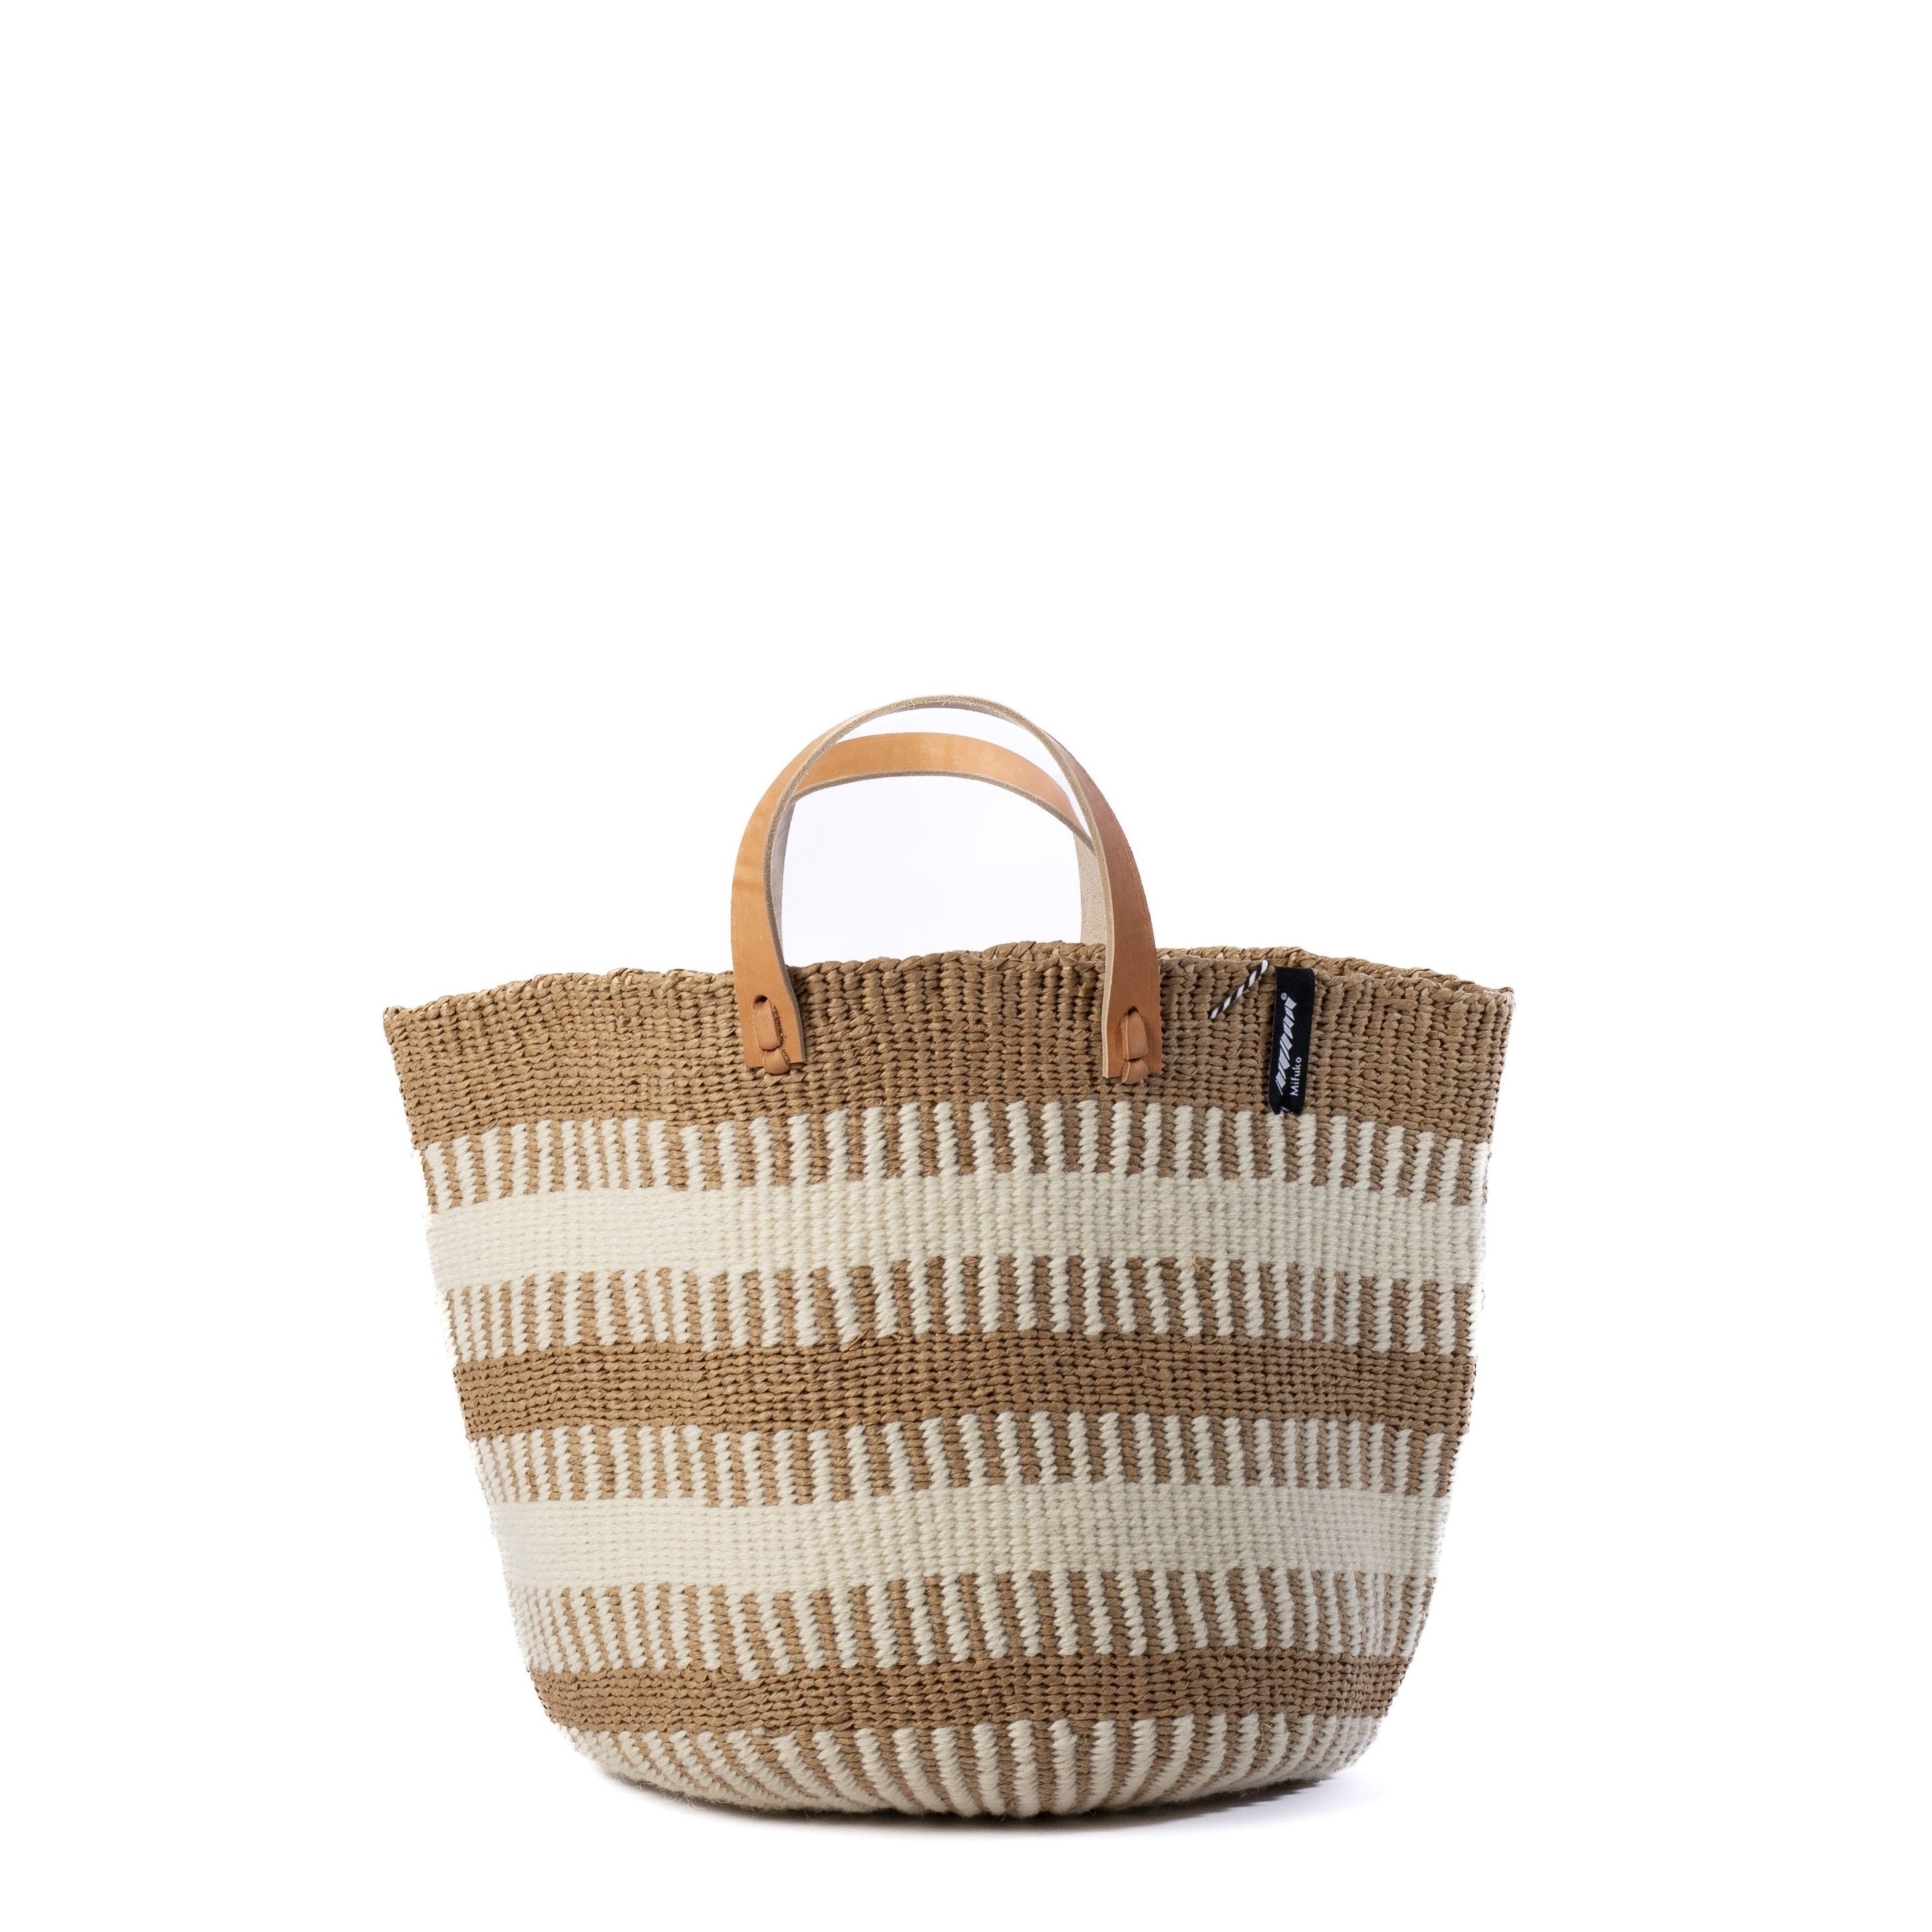 Pamba market basket | White rib weave M